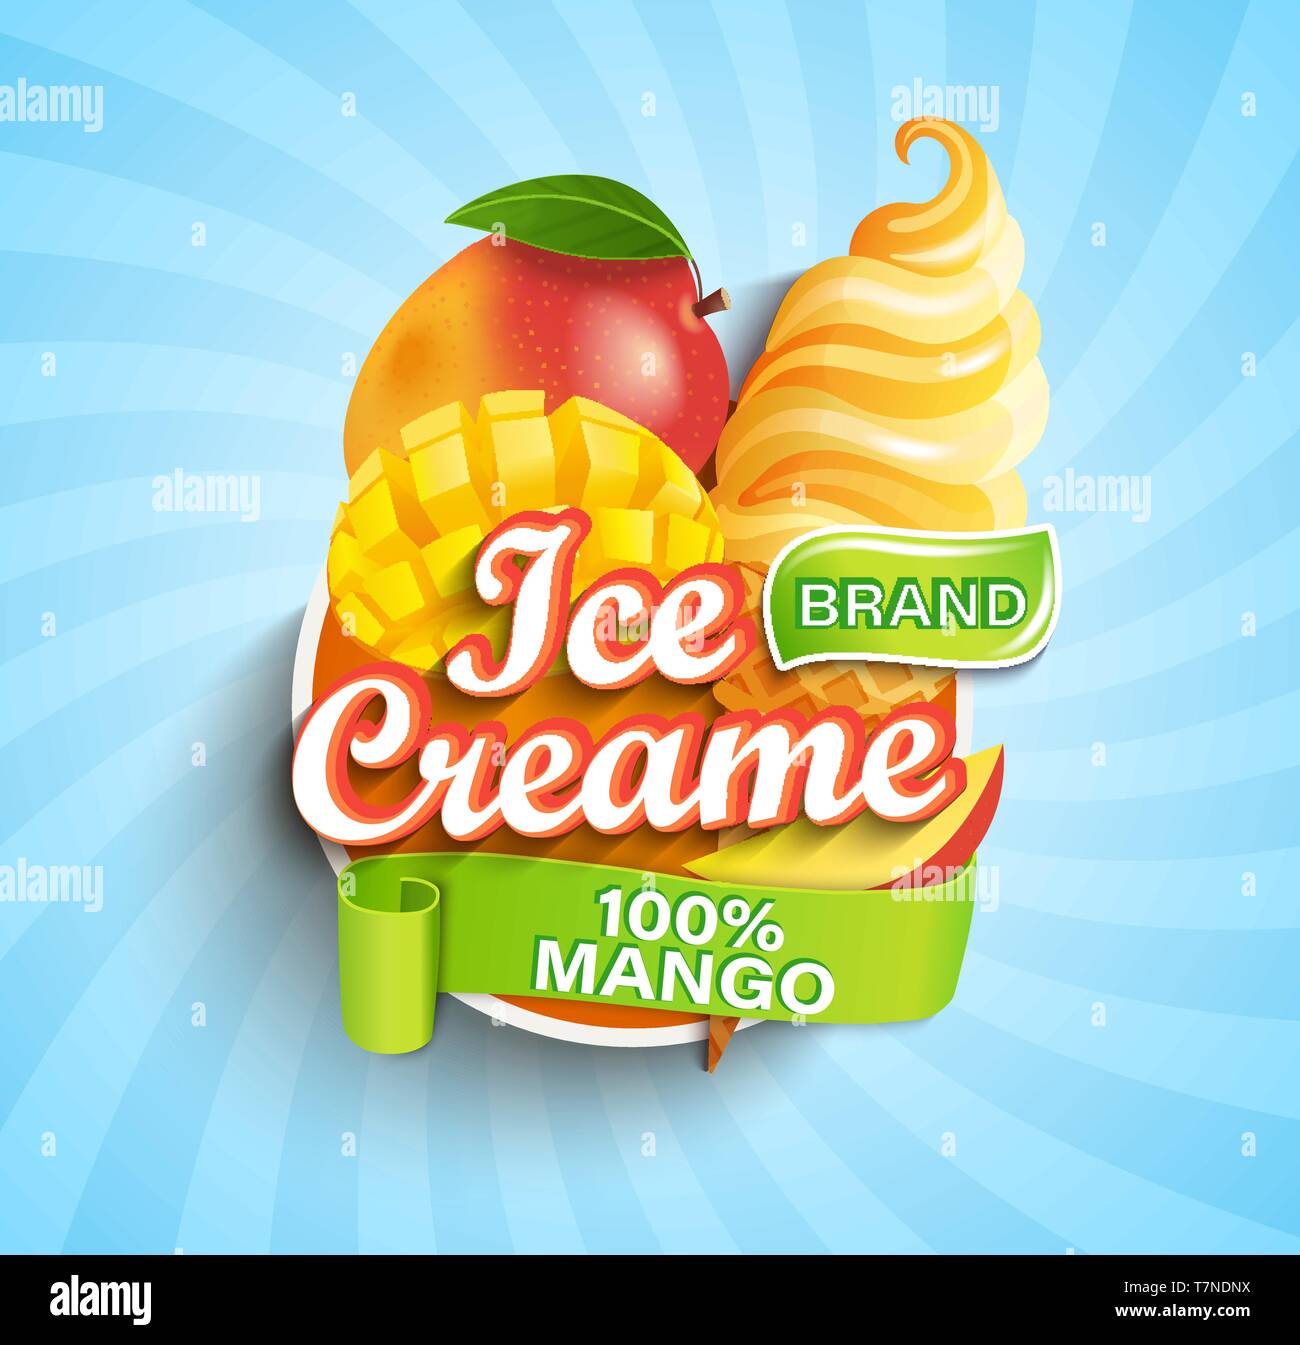 Mango Ice cream logo, label or emblem. Stock Vector